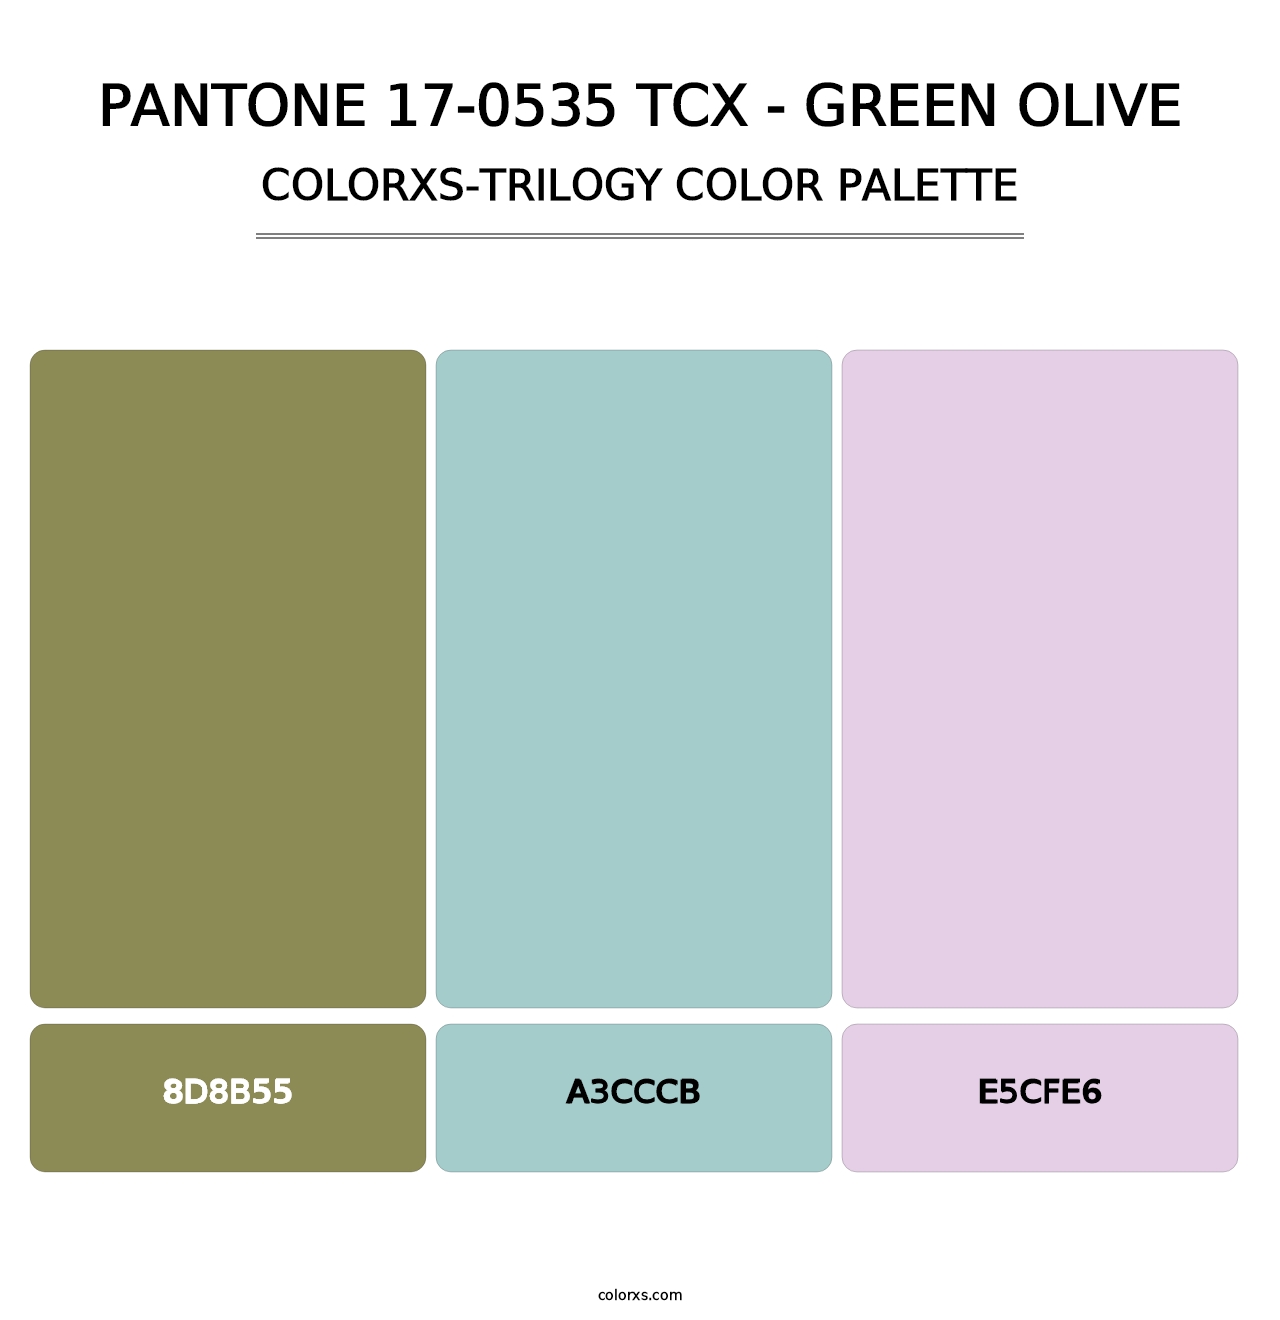 PANTONE 17-0535 TCX - Green Olive - Colorxs Trilogy Palette